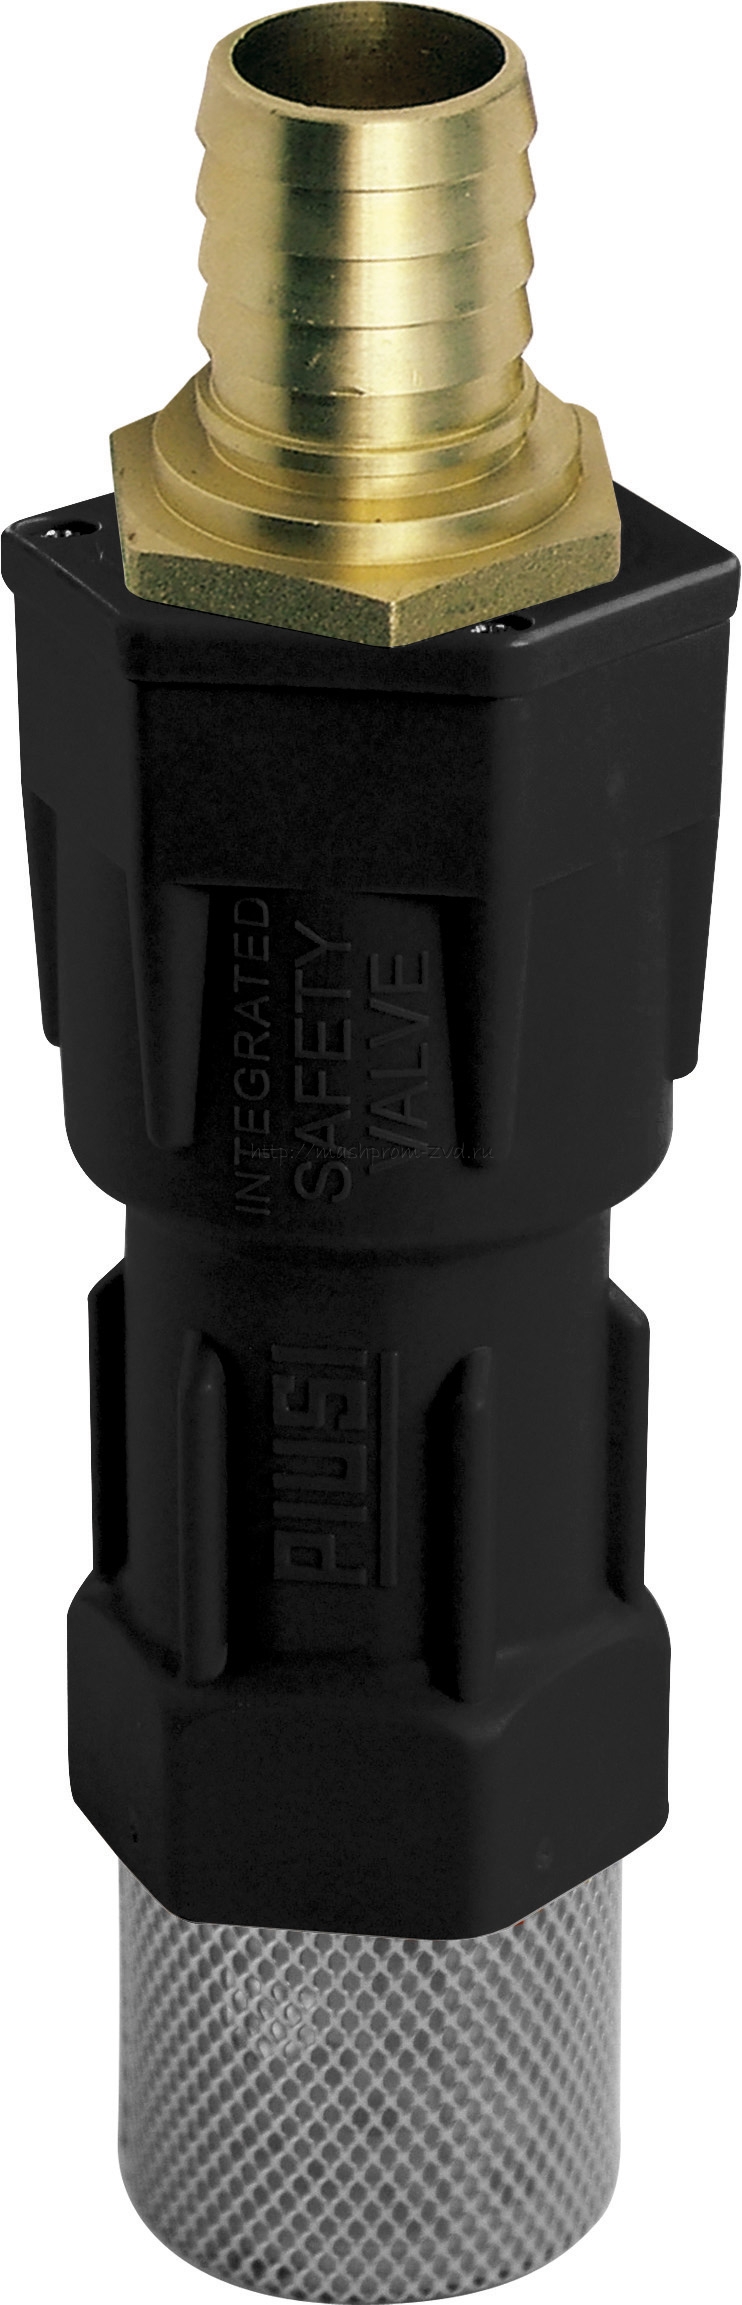 Обратный клапан из пластмассы PIUSI арт. F00612000 20 мм